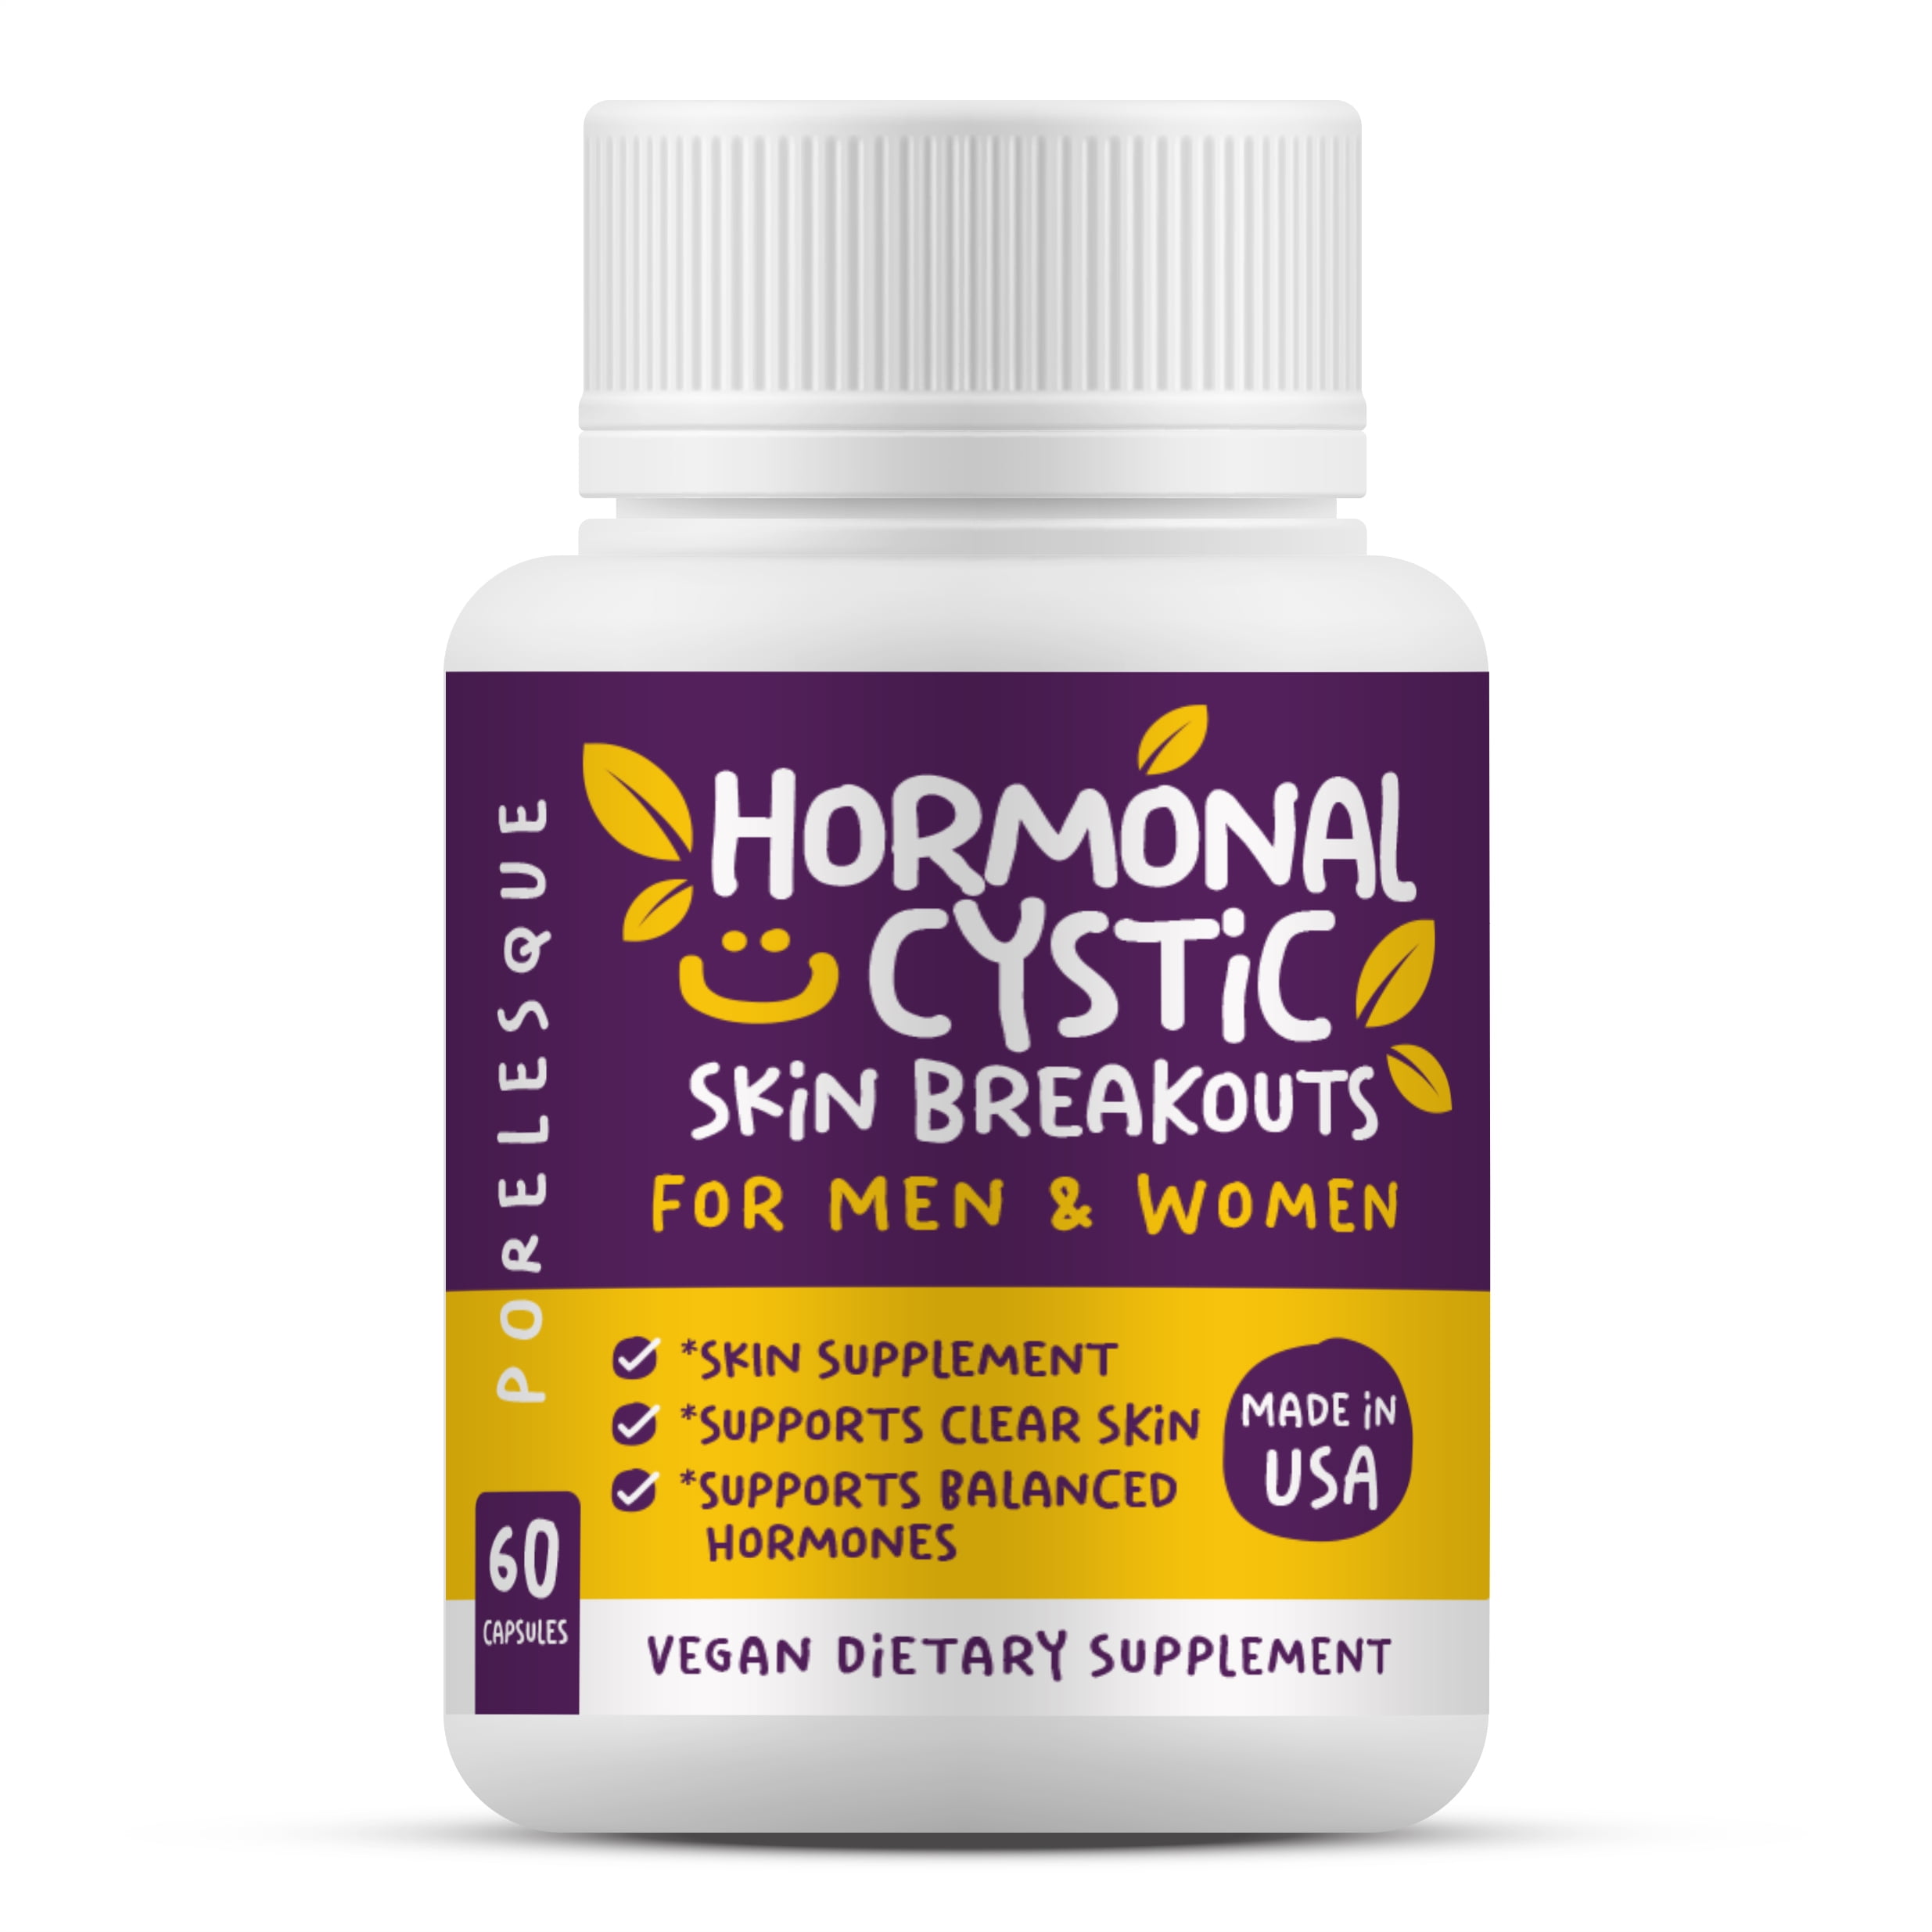 DIM Supplement 200 mg | Estrogen Hormone Balance for Women & Men | Hormonal  Acne Supplements, Menopause Support, Antioxidant Support | Clean Label